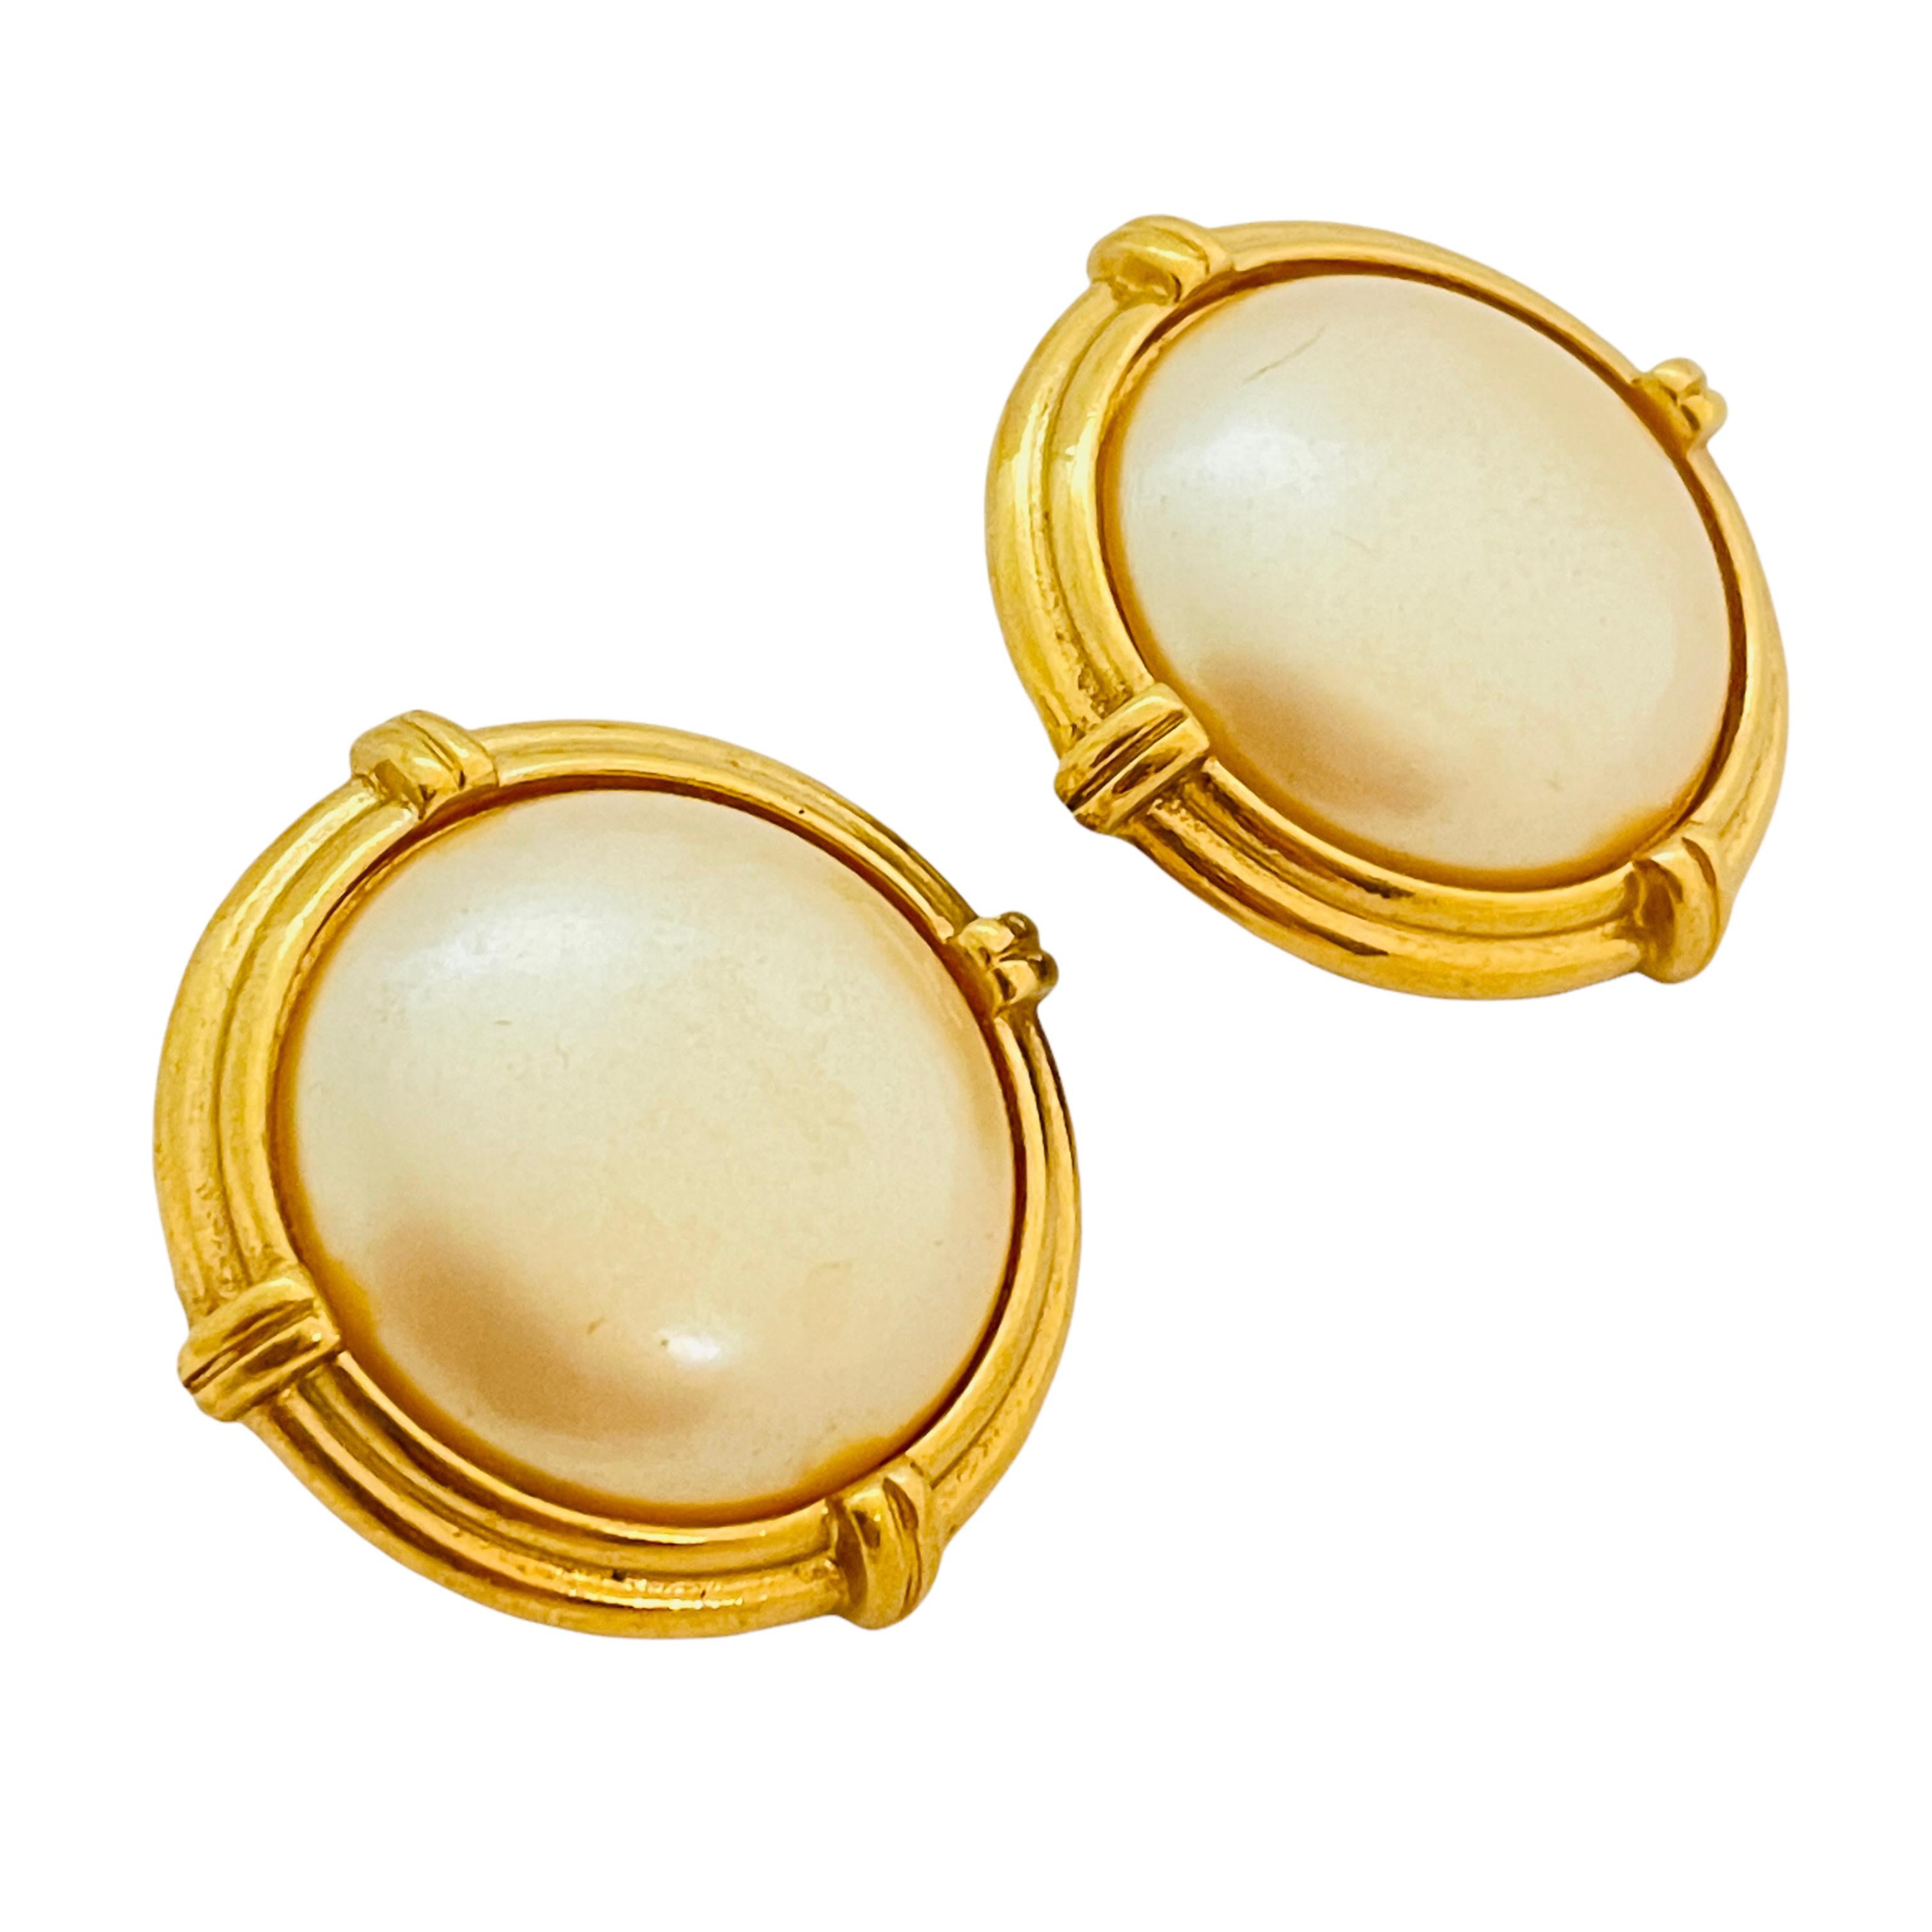 DETAILS

• signed MONET

• gold tone with pearls

• vintage designer runway earrings

MEASUREMENTS

• 1.25